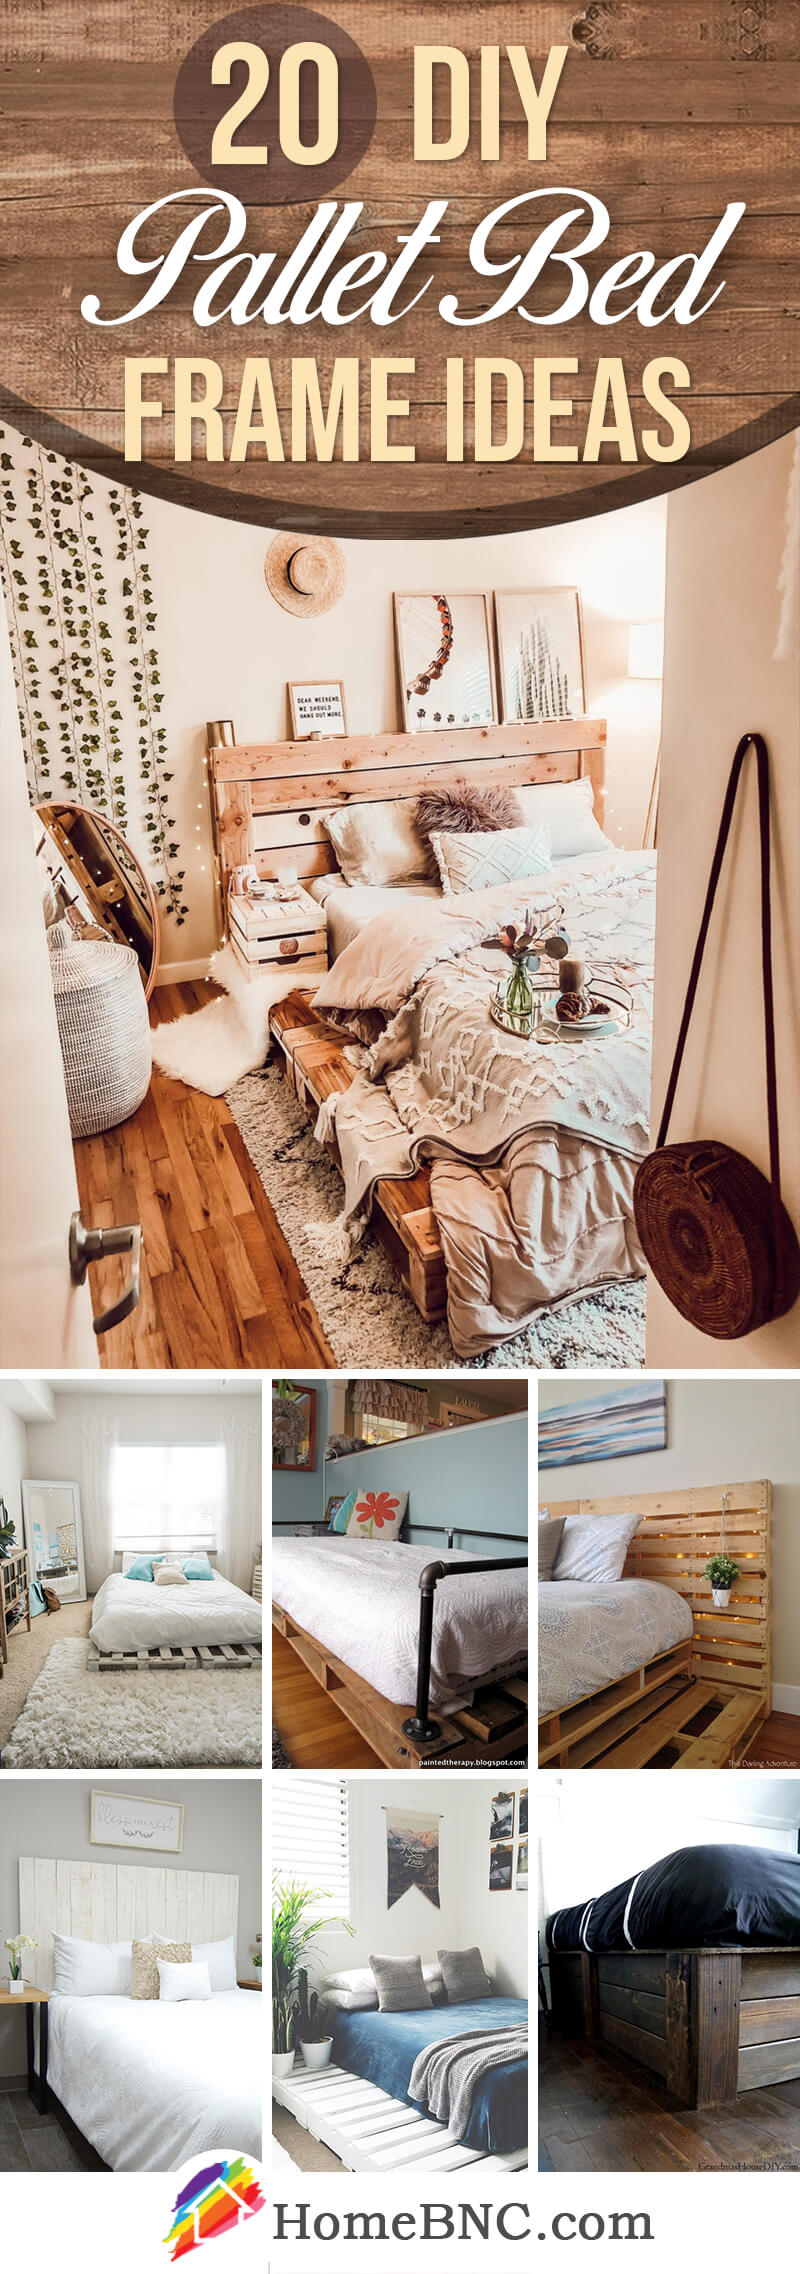 20 Best DIY Pallet Bed Frame Ideas to Update Your Bedroom in 20